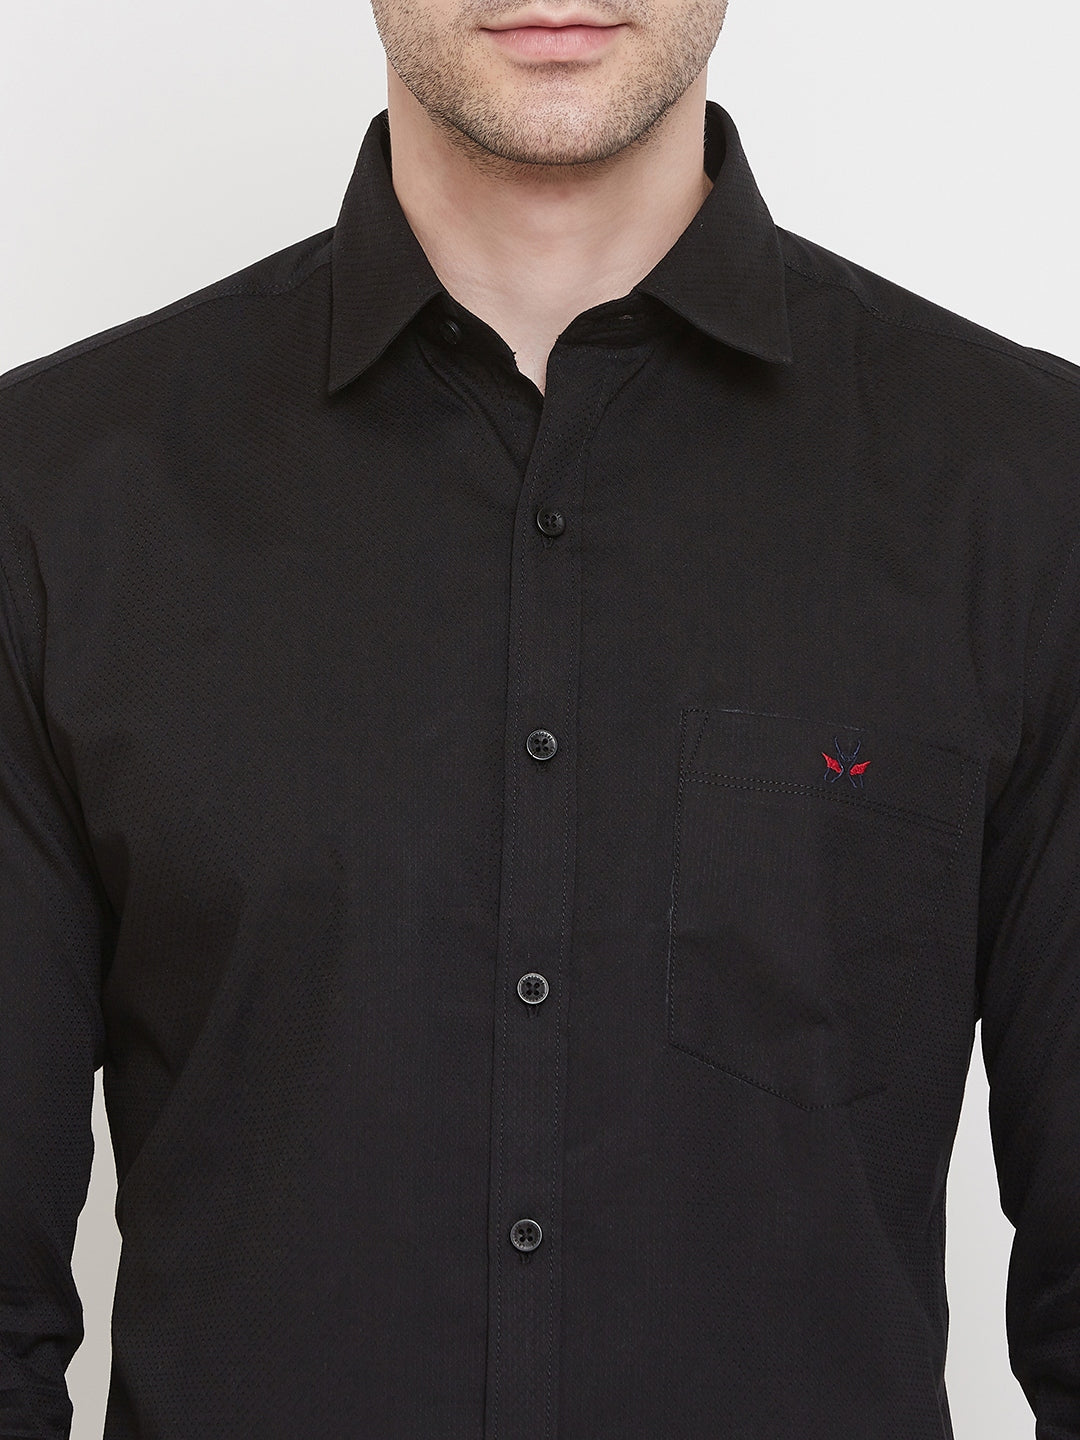 Black Slim Fit shirt - Men Shirts